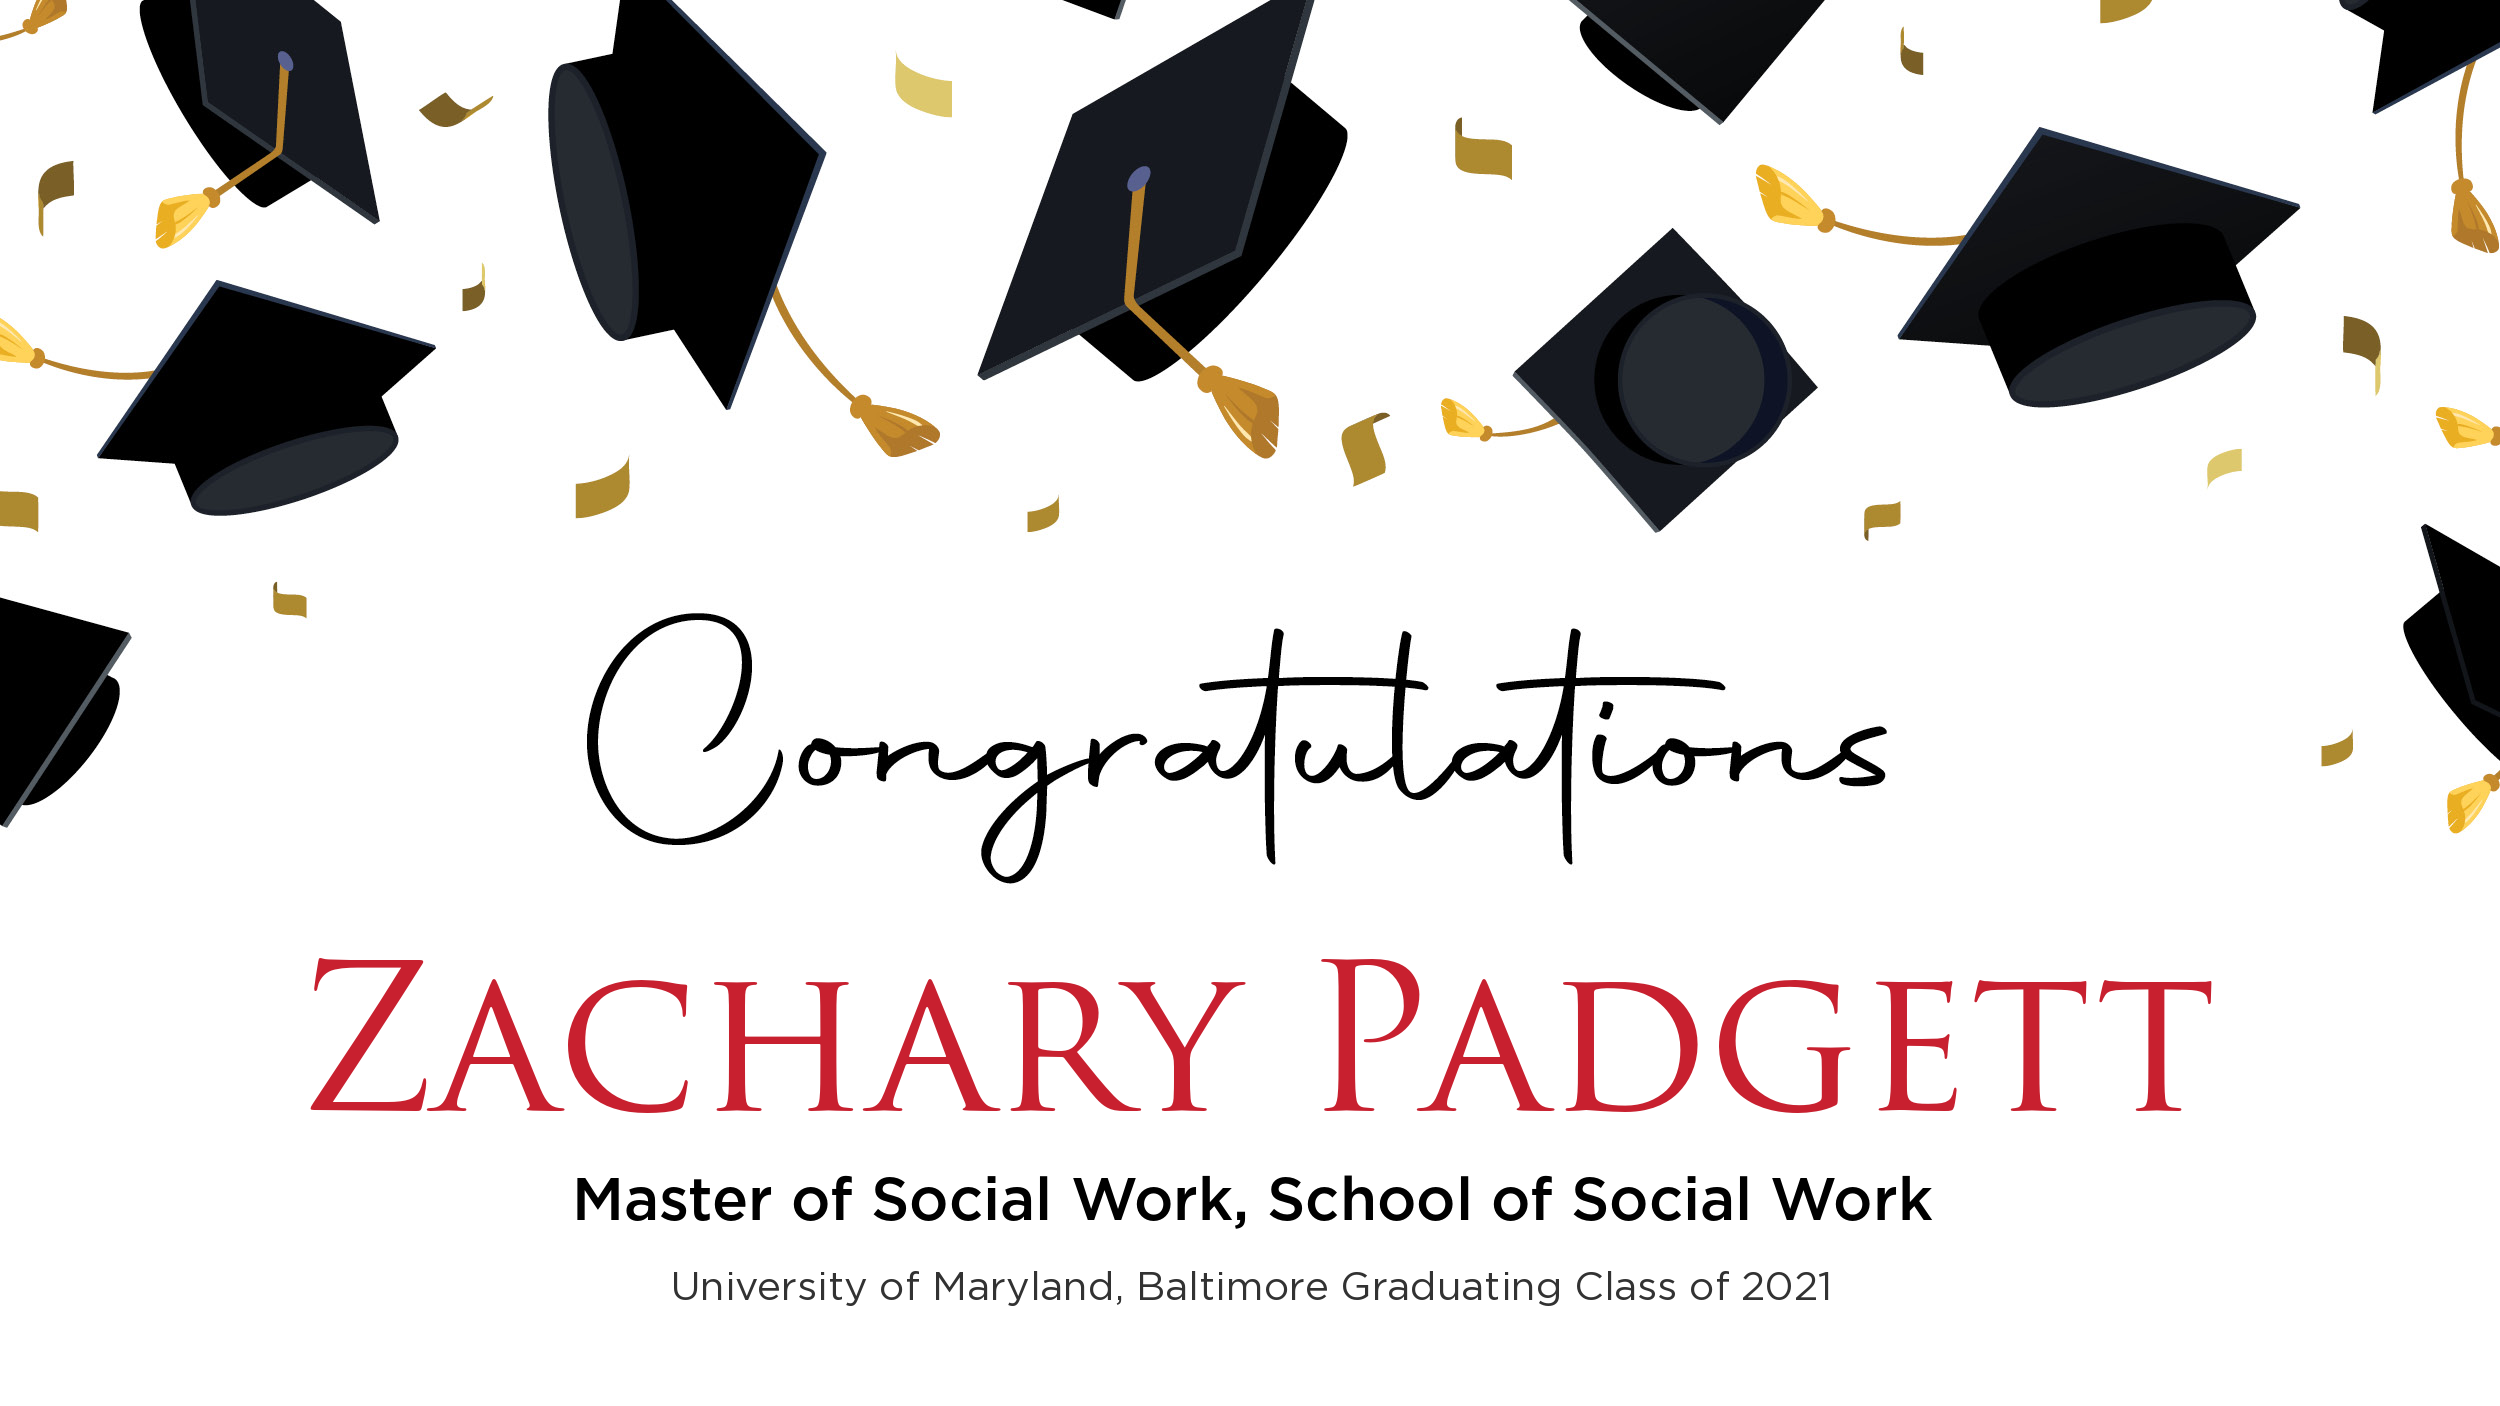 Congratulations Zachary Padgett, Master of Social Work